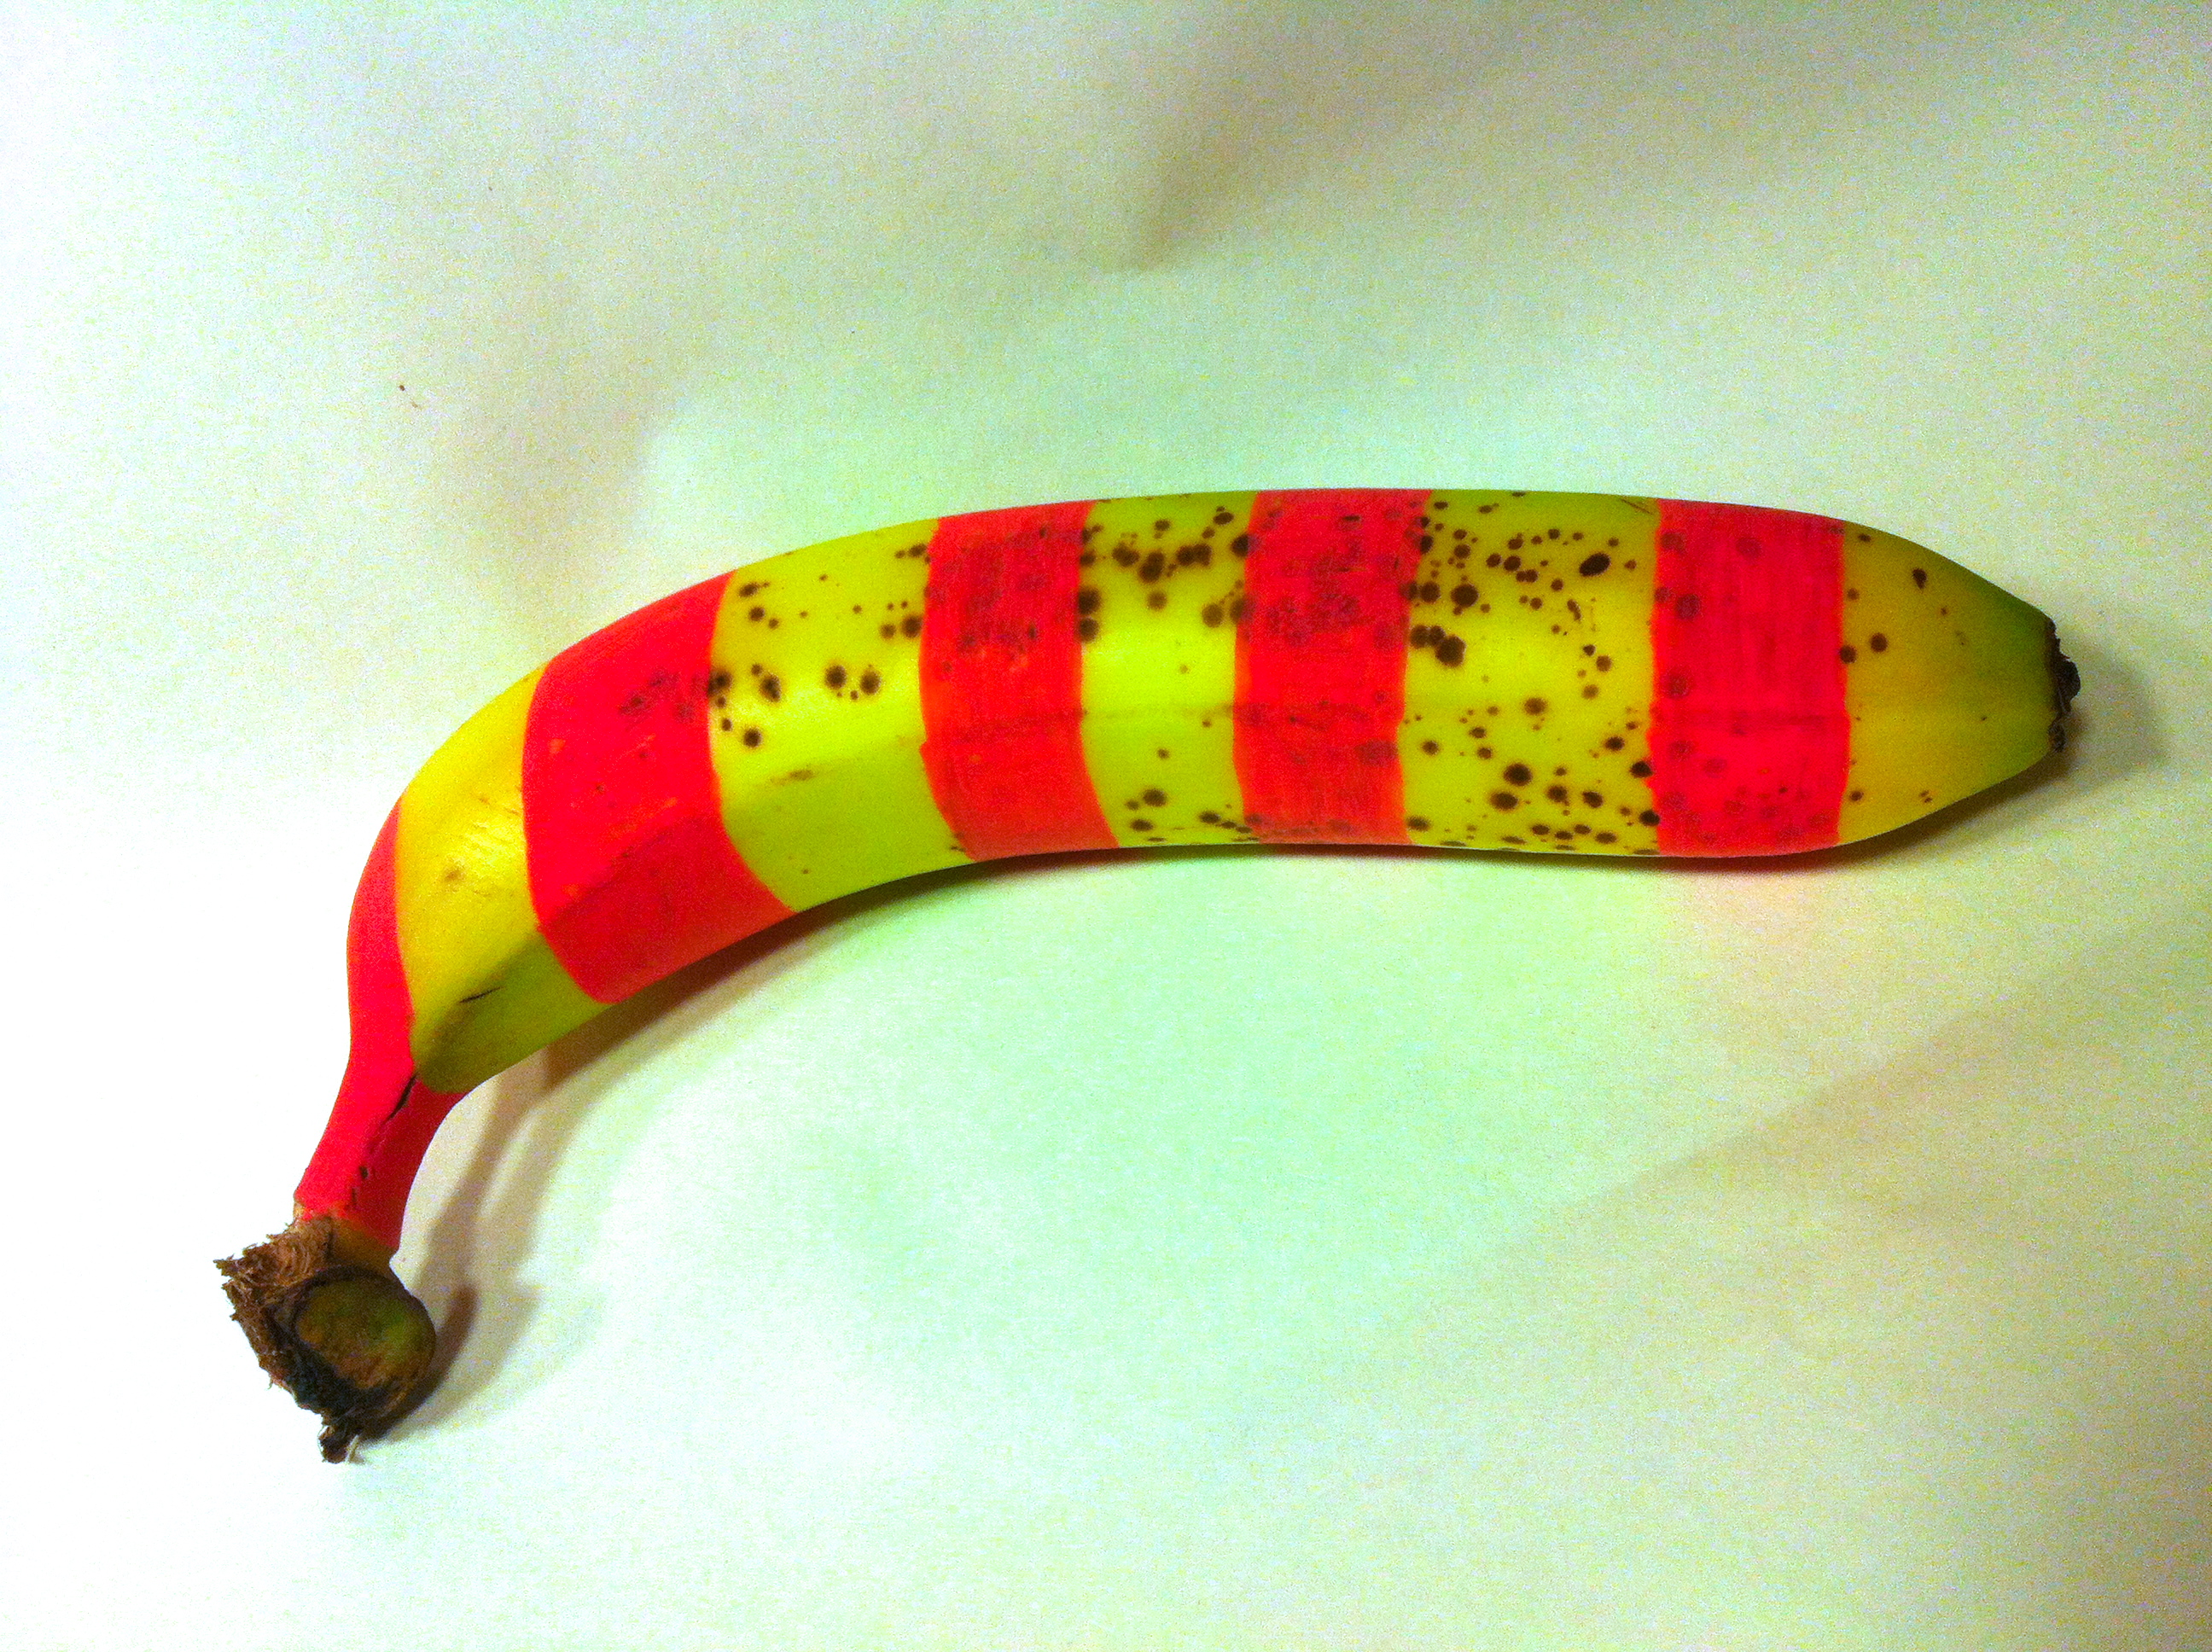 Banana just stripes today